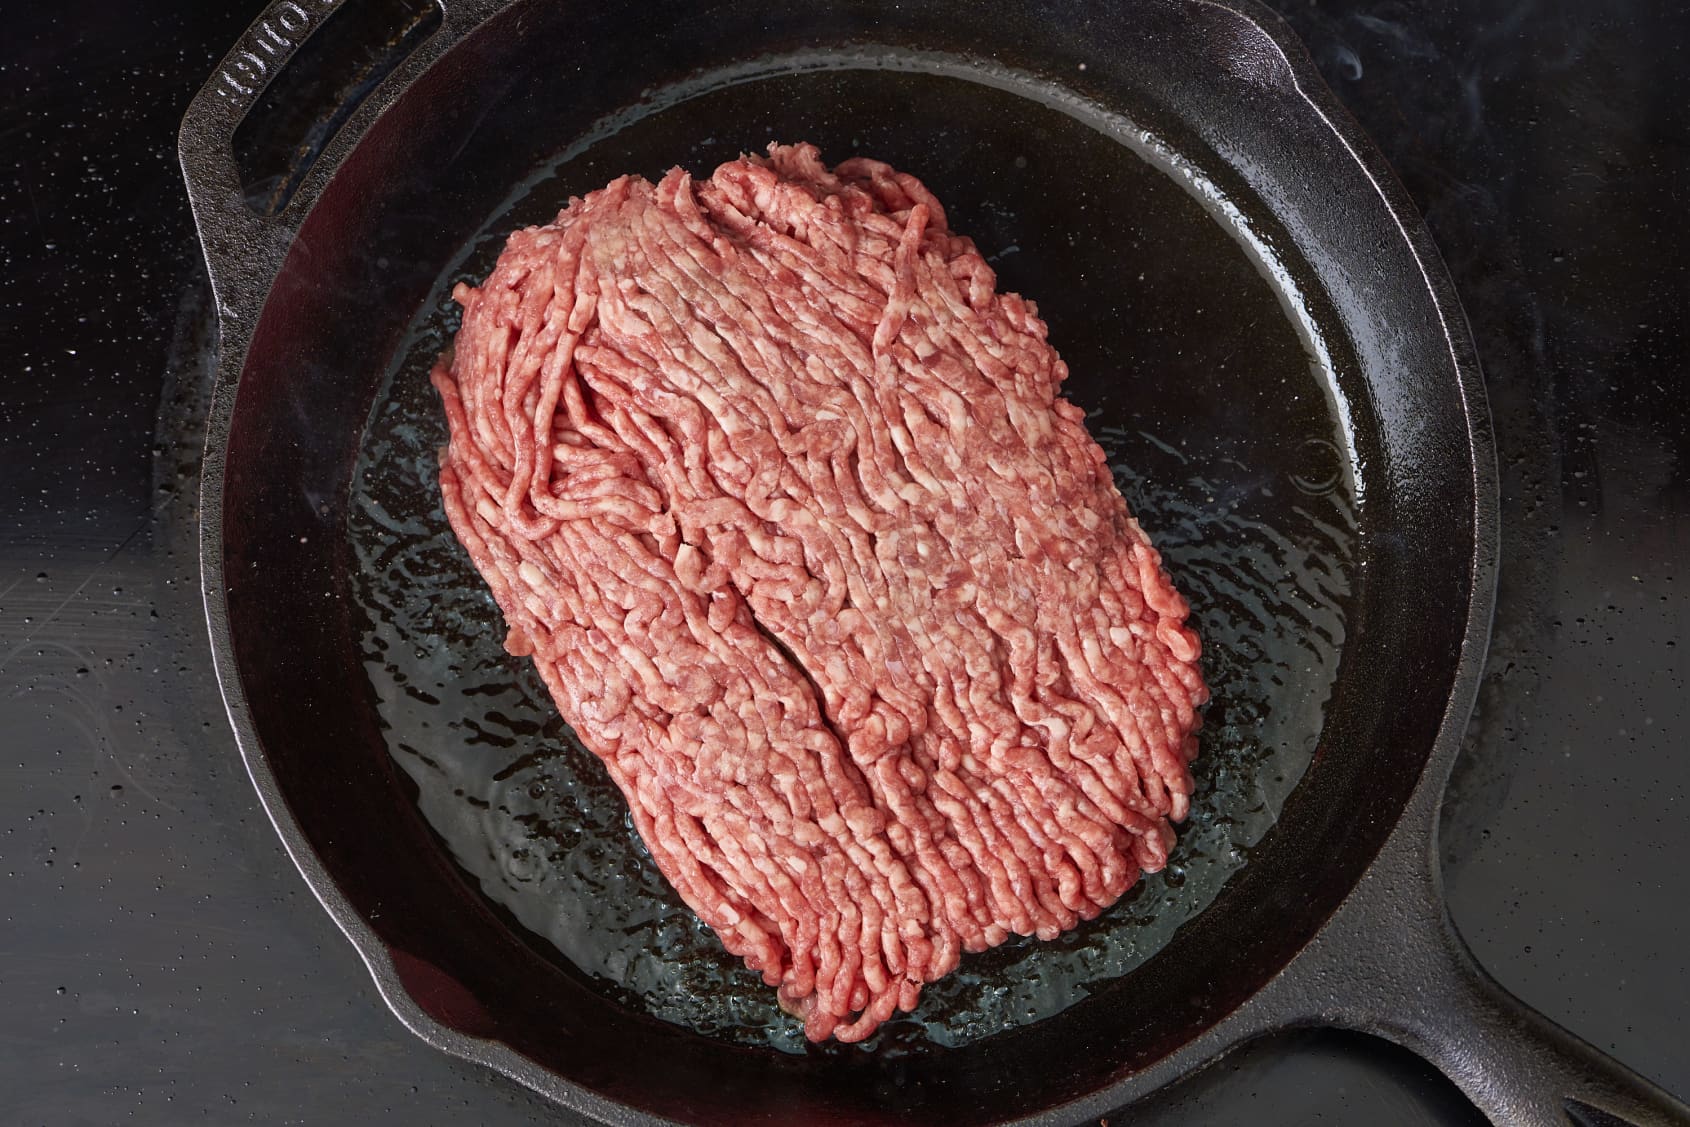 A heat-resistant utensil to break up ground beef, stir sauces